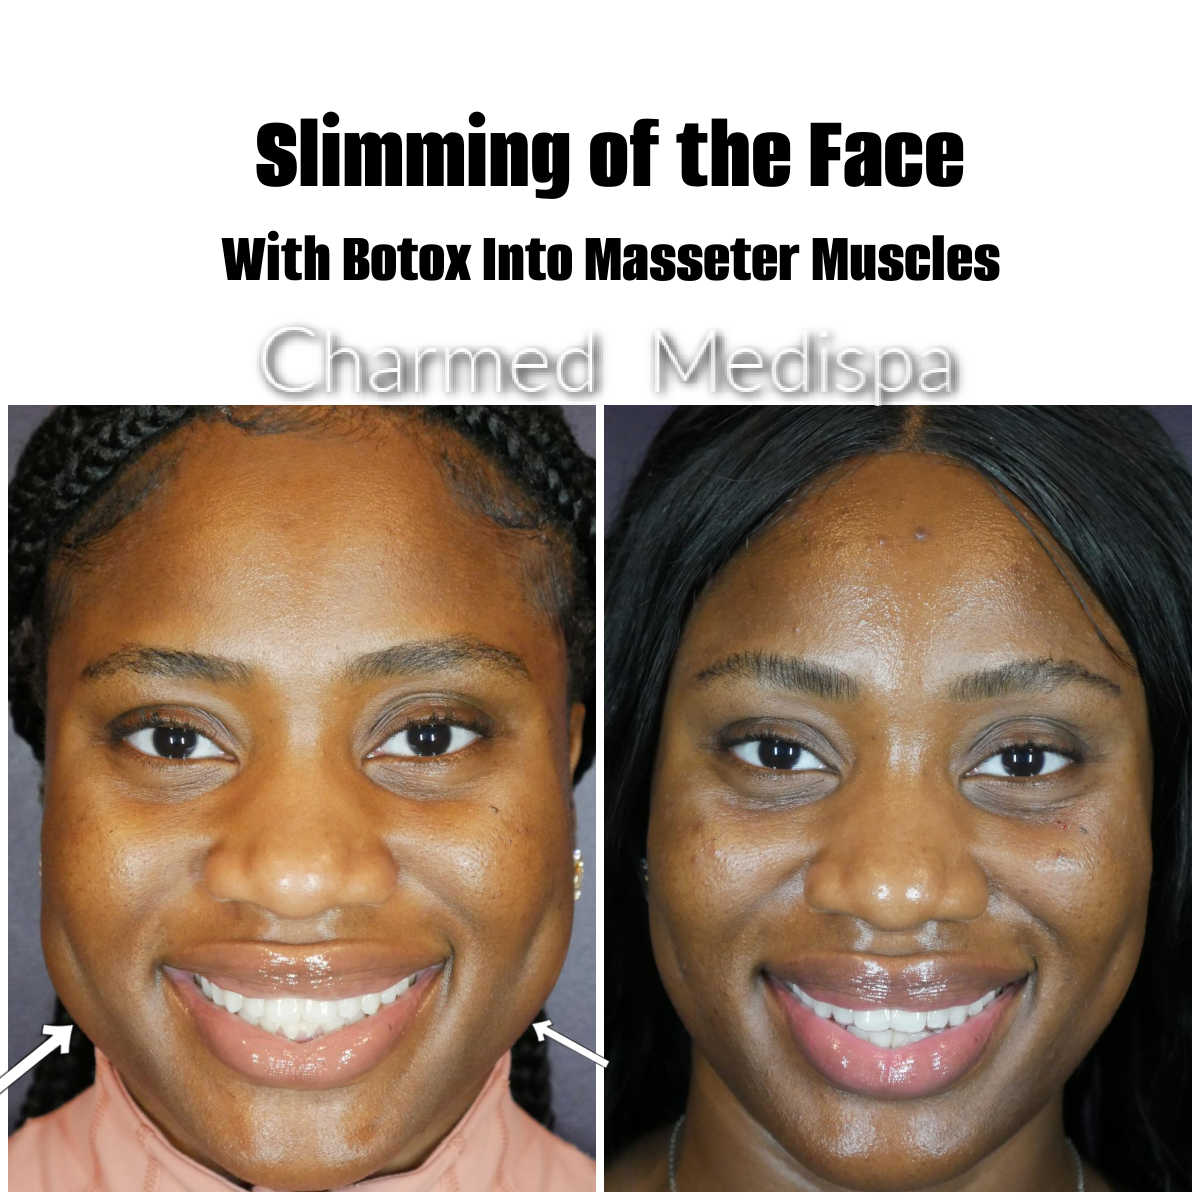 https://www.charmedmedispa.com/wp-content/uploads/Charmed-Medispa-Botox-Masseters-Slimming-Face-1.jpg